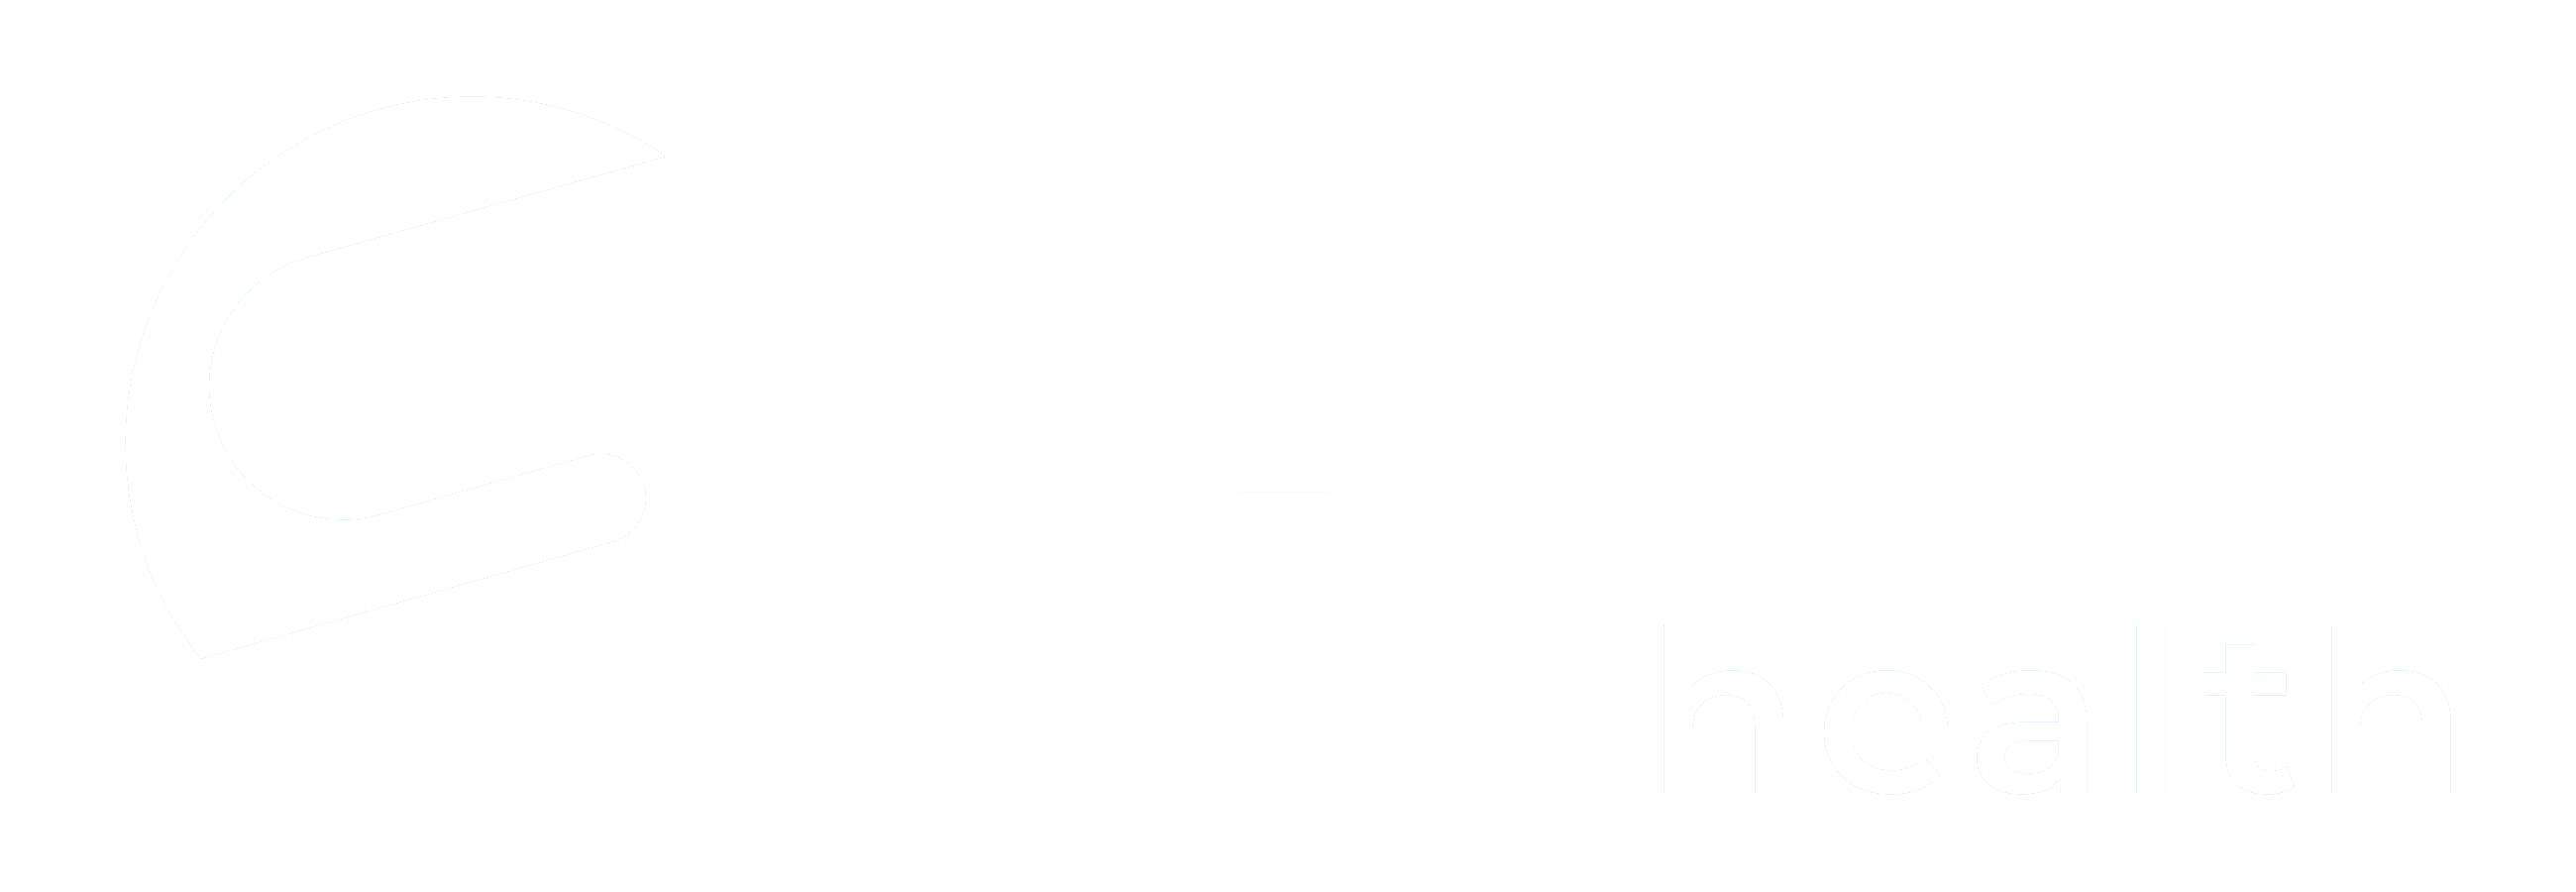 Savvos Logo - White